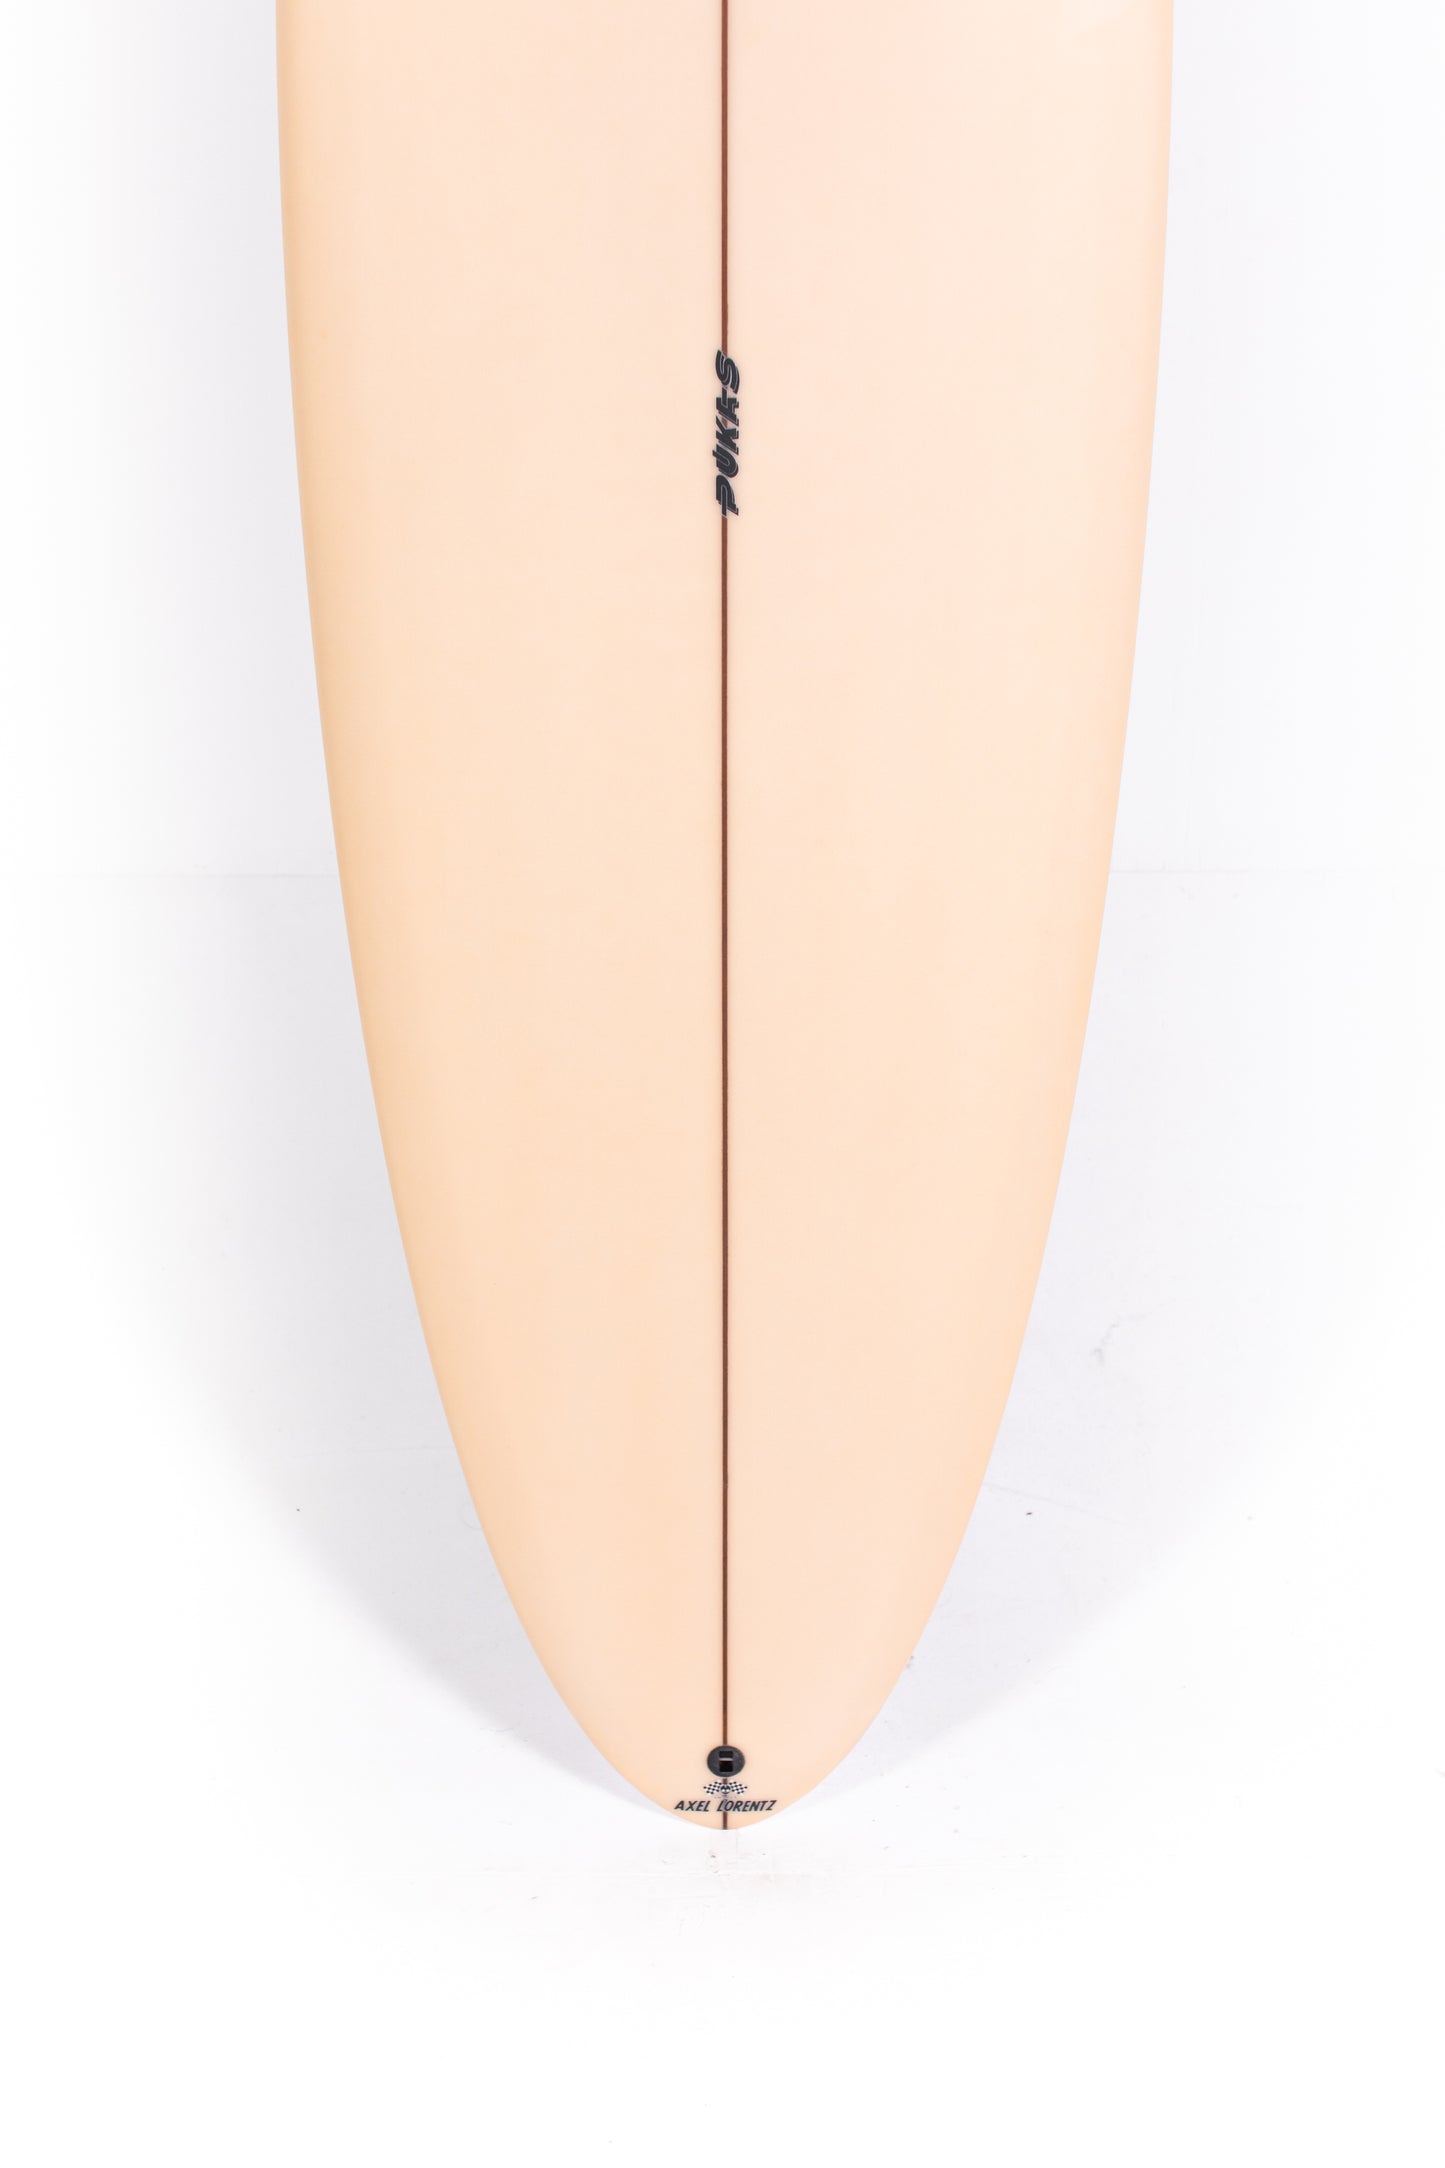 
                  
                    Pukas-Surf-Shop-Pukas-Surfboards-Lady-Twin-Axel-Lorentz-6_6
                  
                